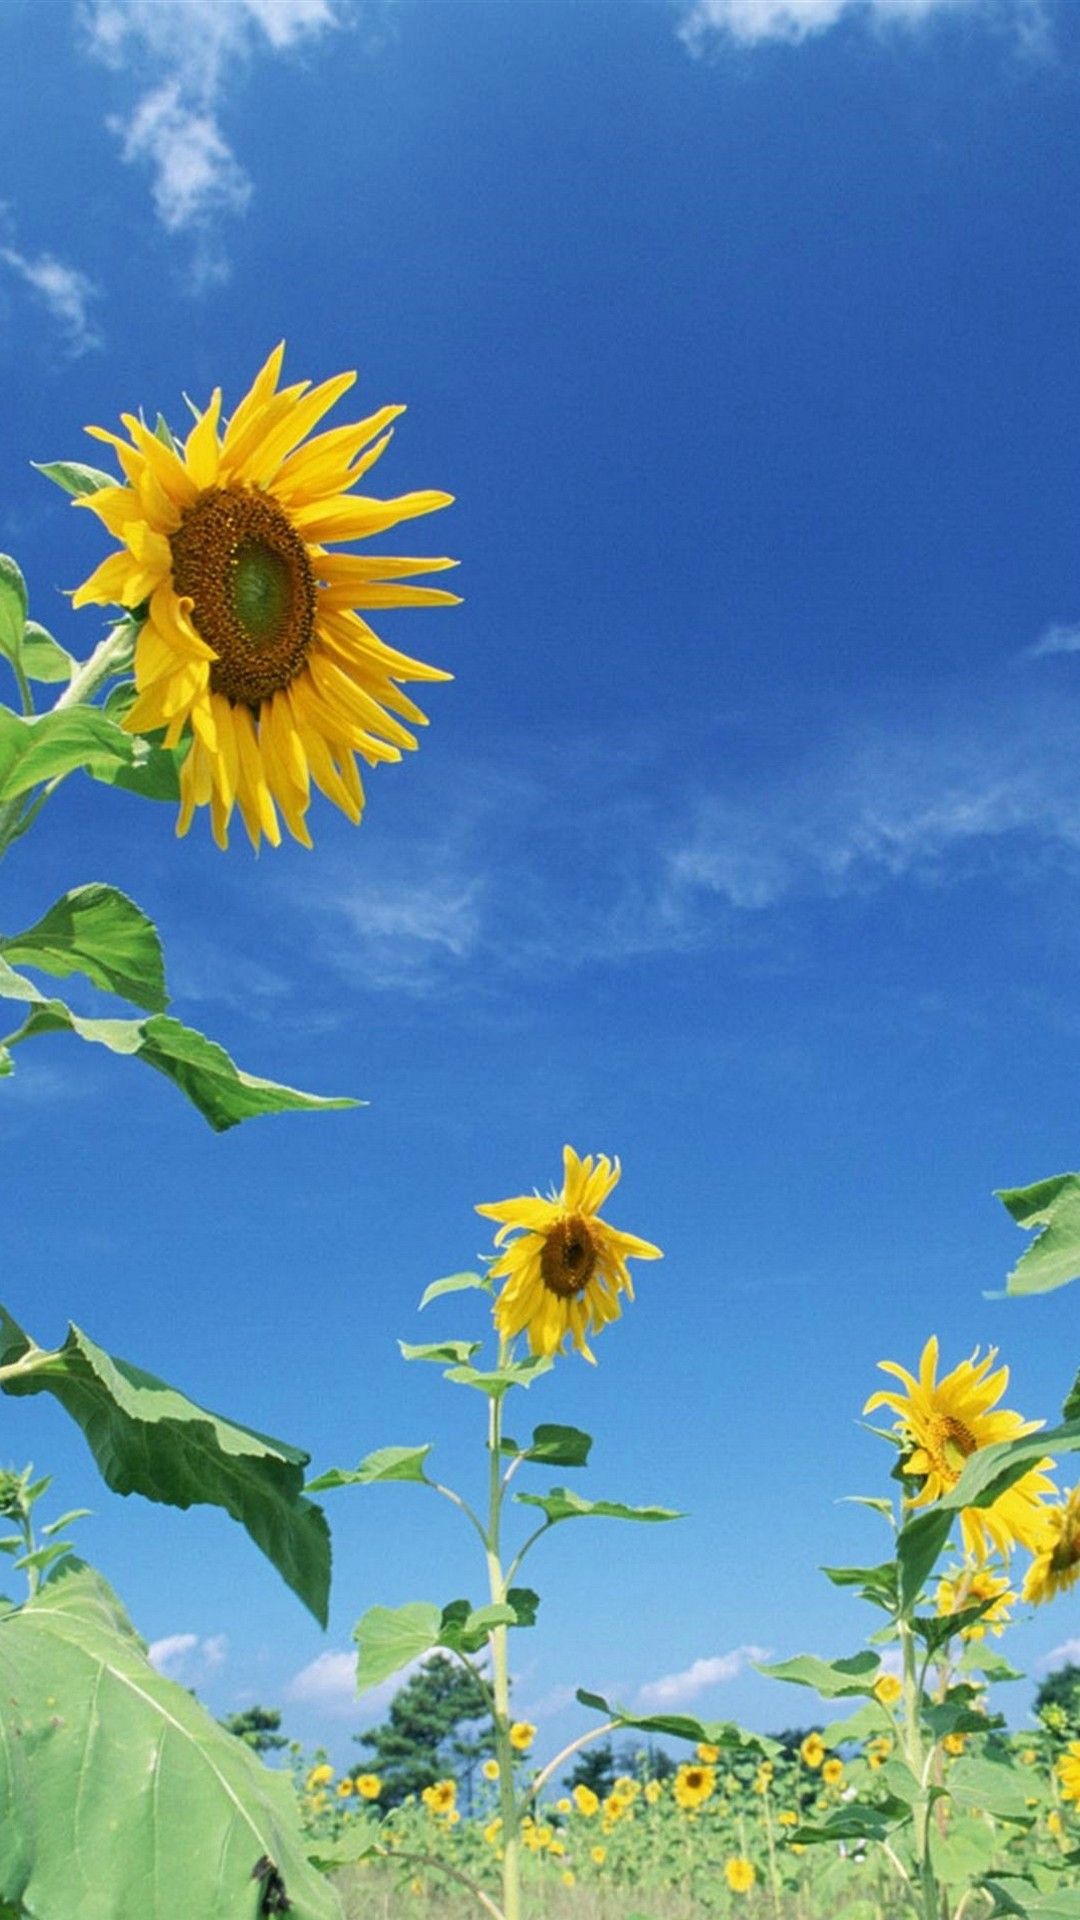 Sunflower Android Wallpaper HD - 2019 fondos de pantalla de Android